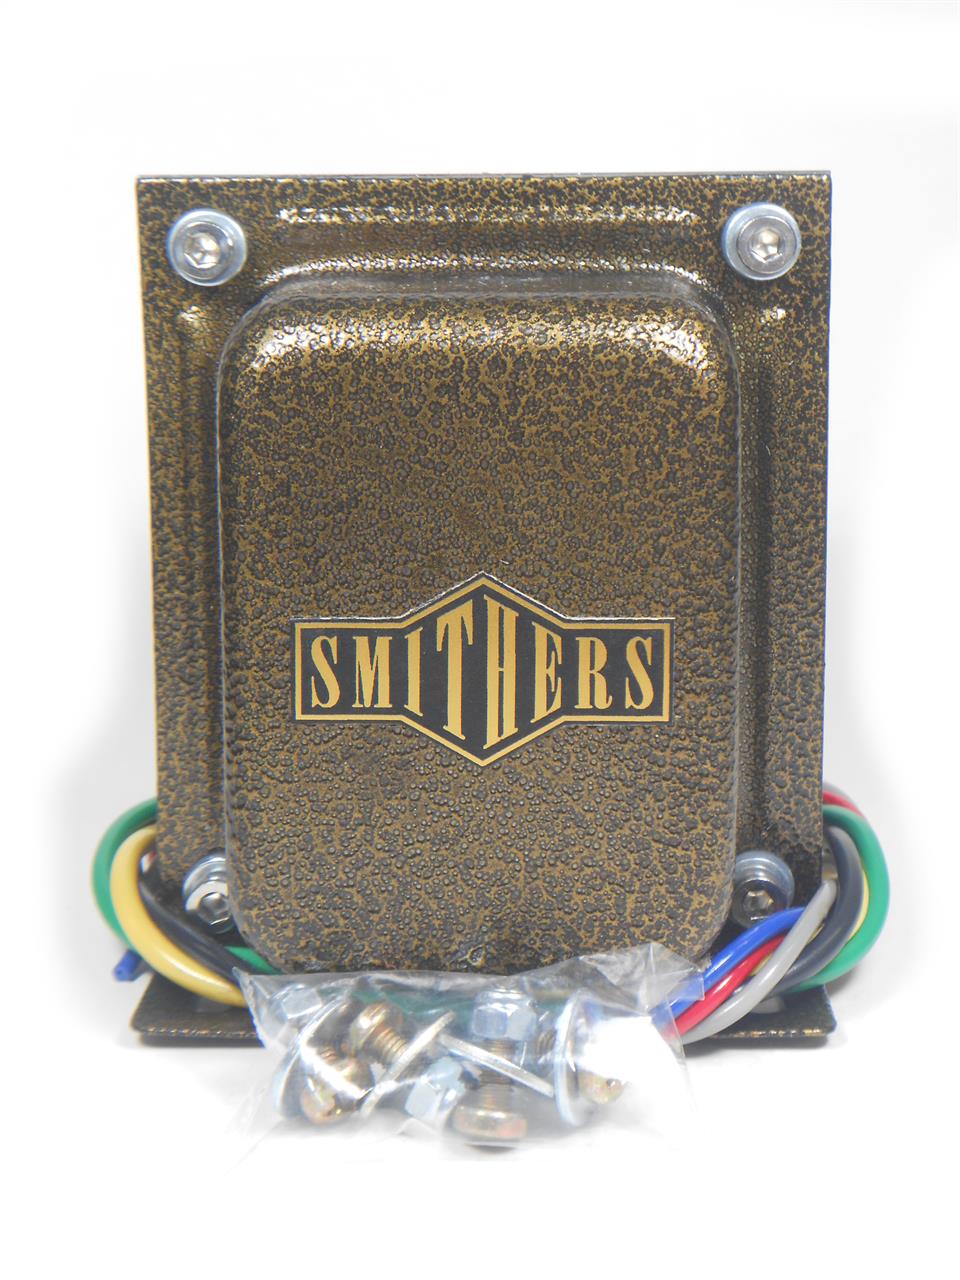 Transformadores e indutores Smithers Áudio - Transformador de saída 50W SM45 Smithers Áudio